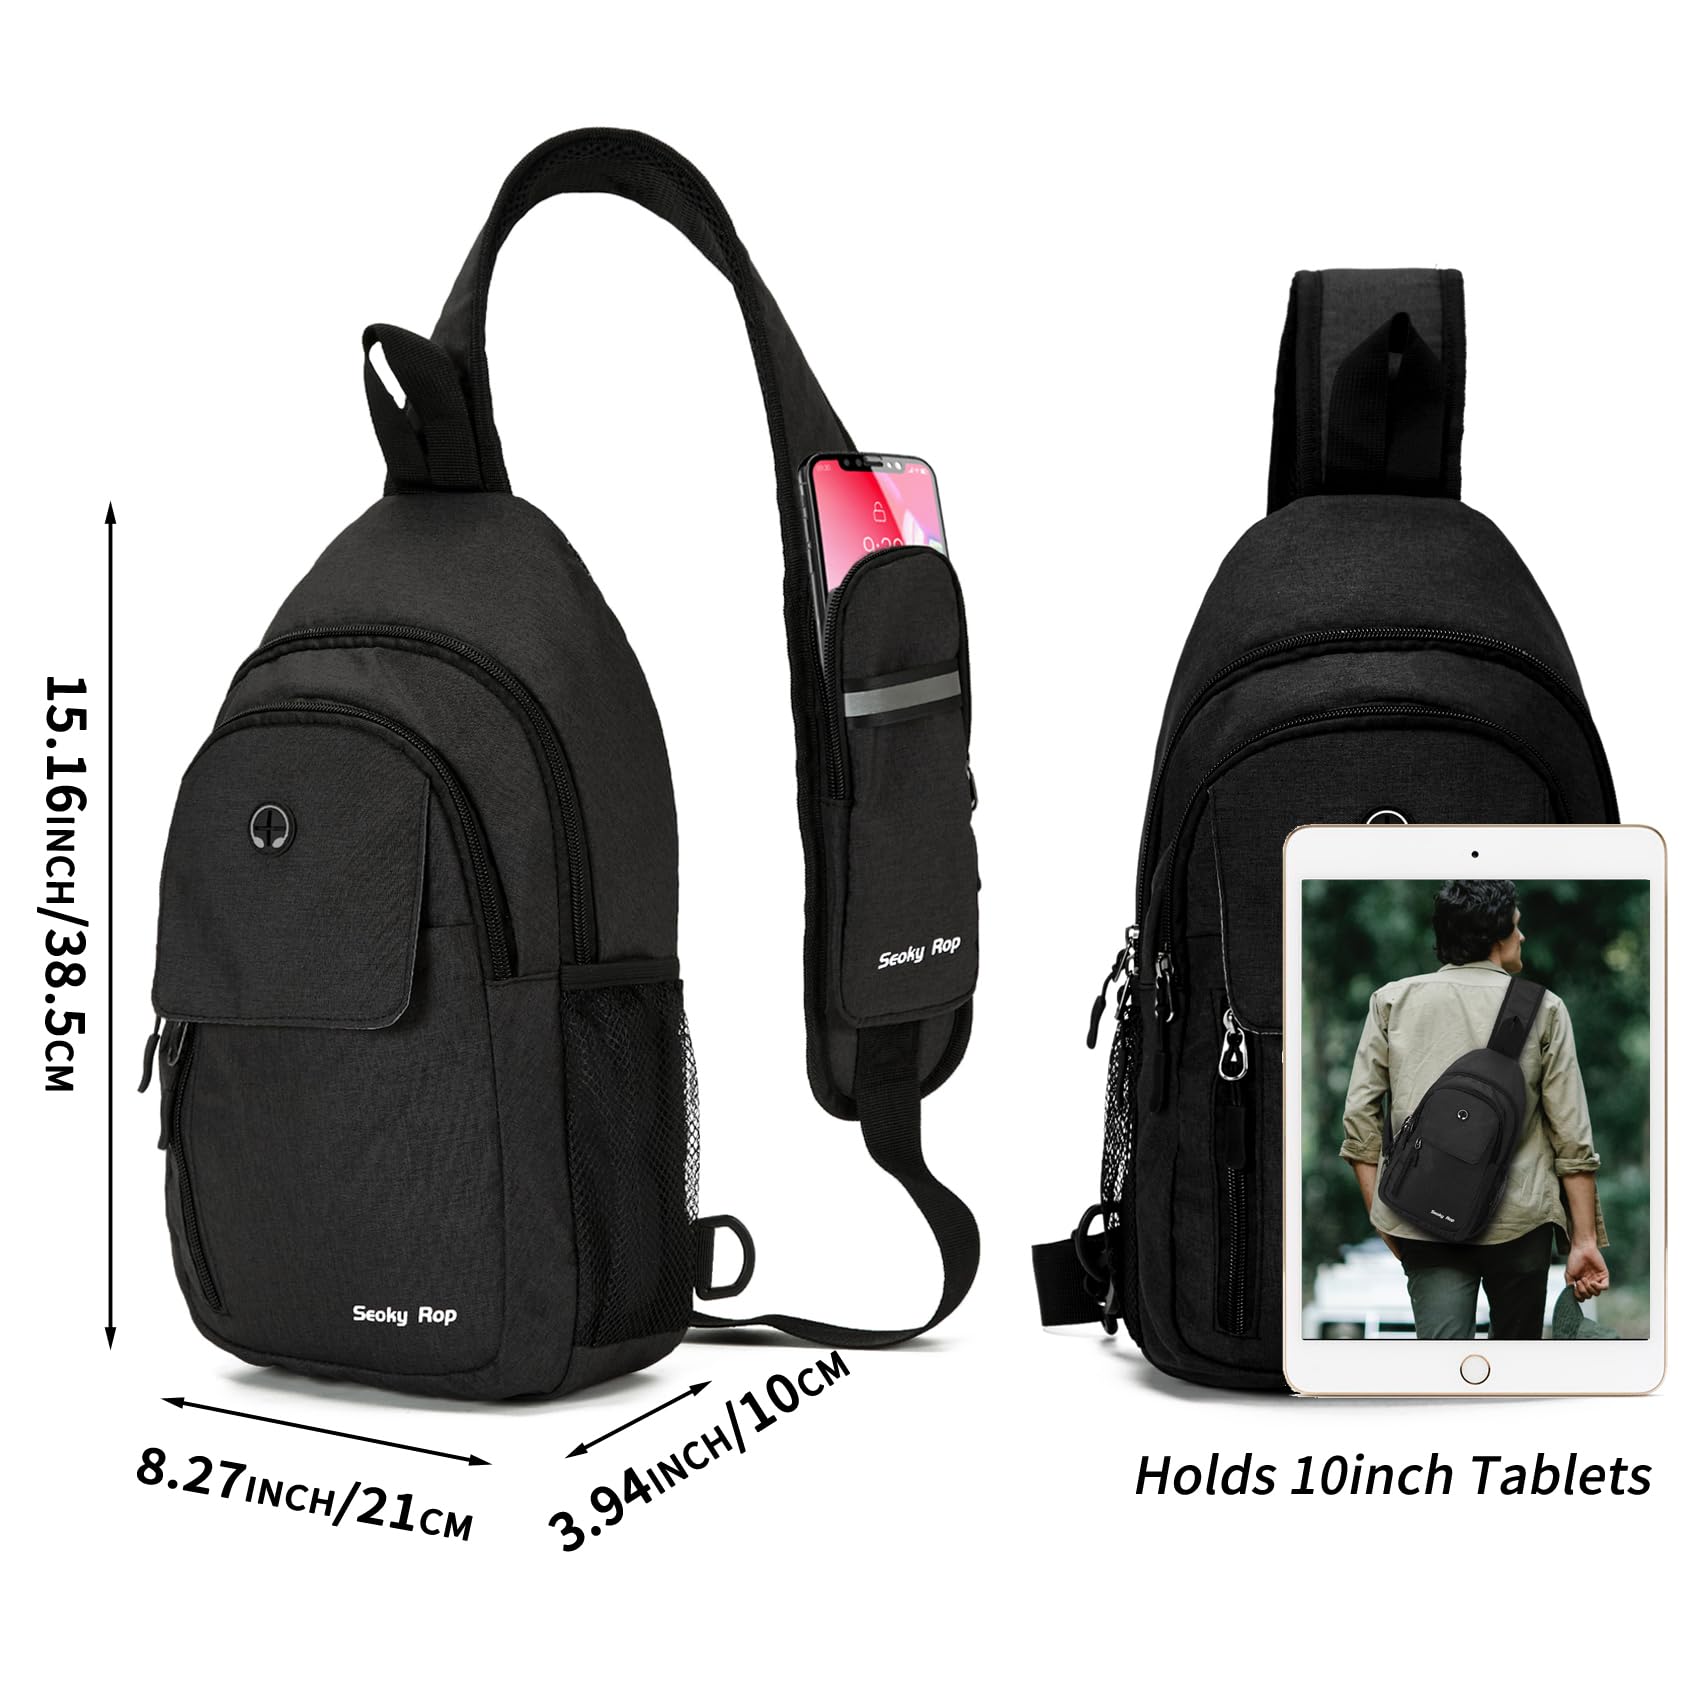 Seoky Rop Sling Backpack Bag for Men Women Water Resistant Crossbody Bag Daypack for Hiking Travel Black